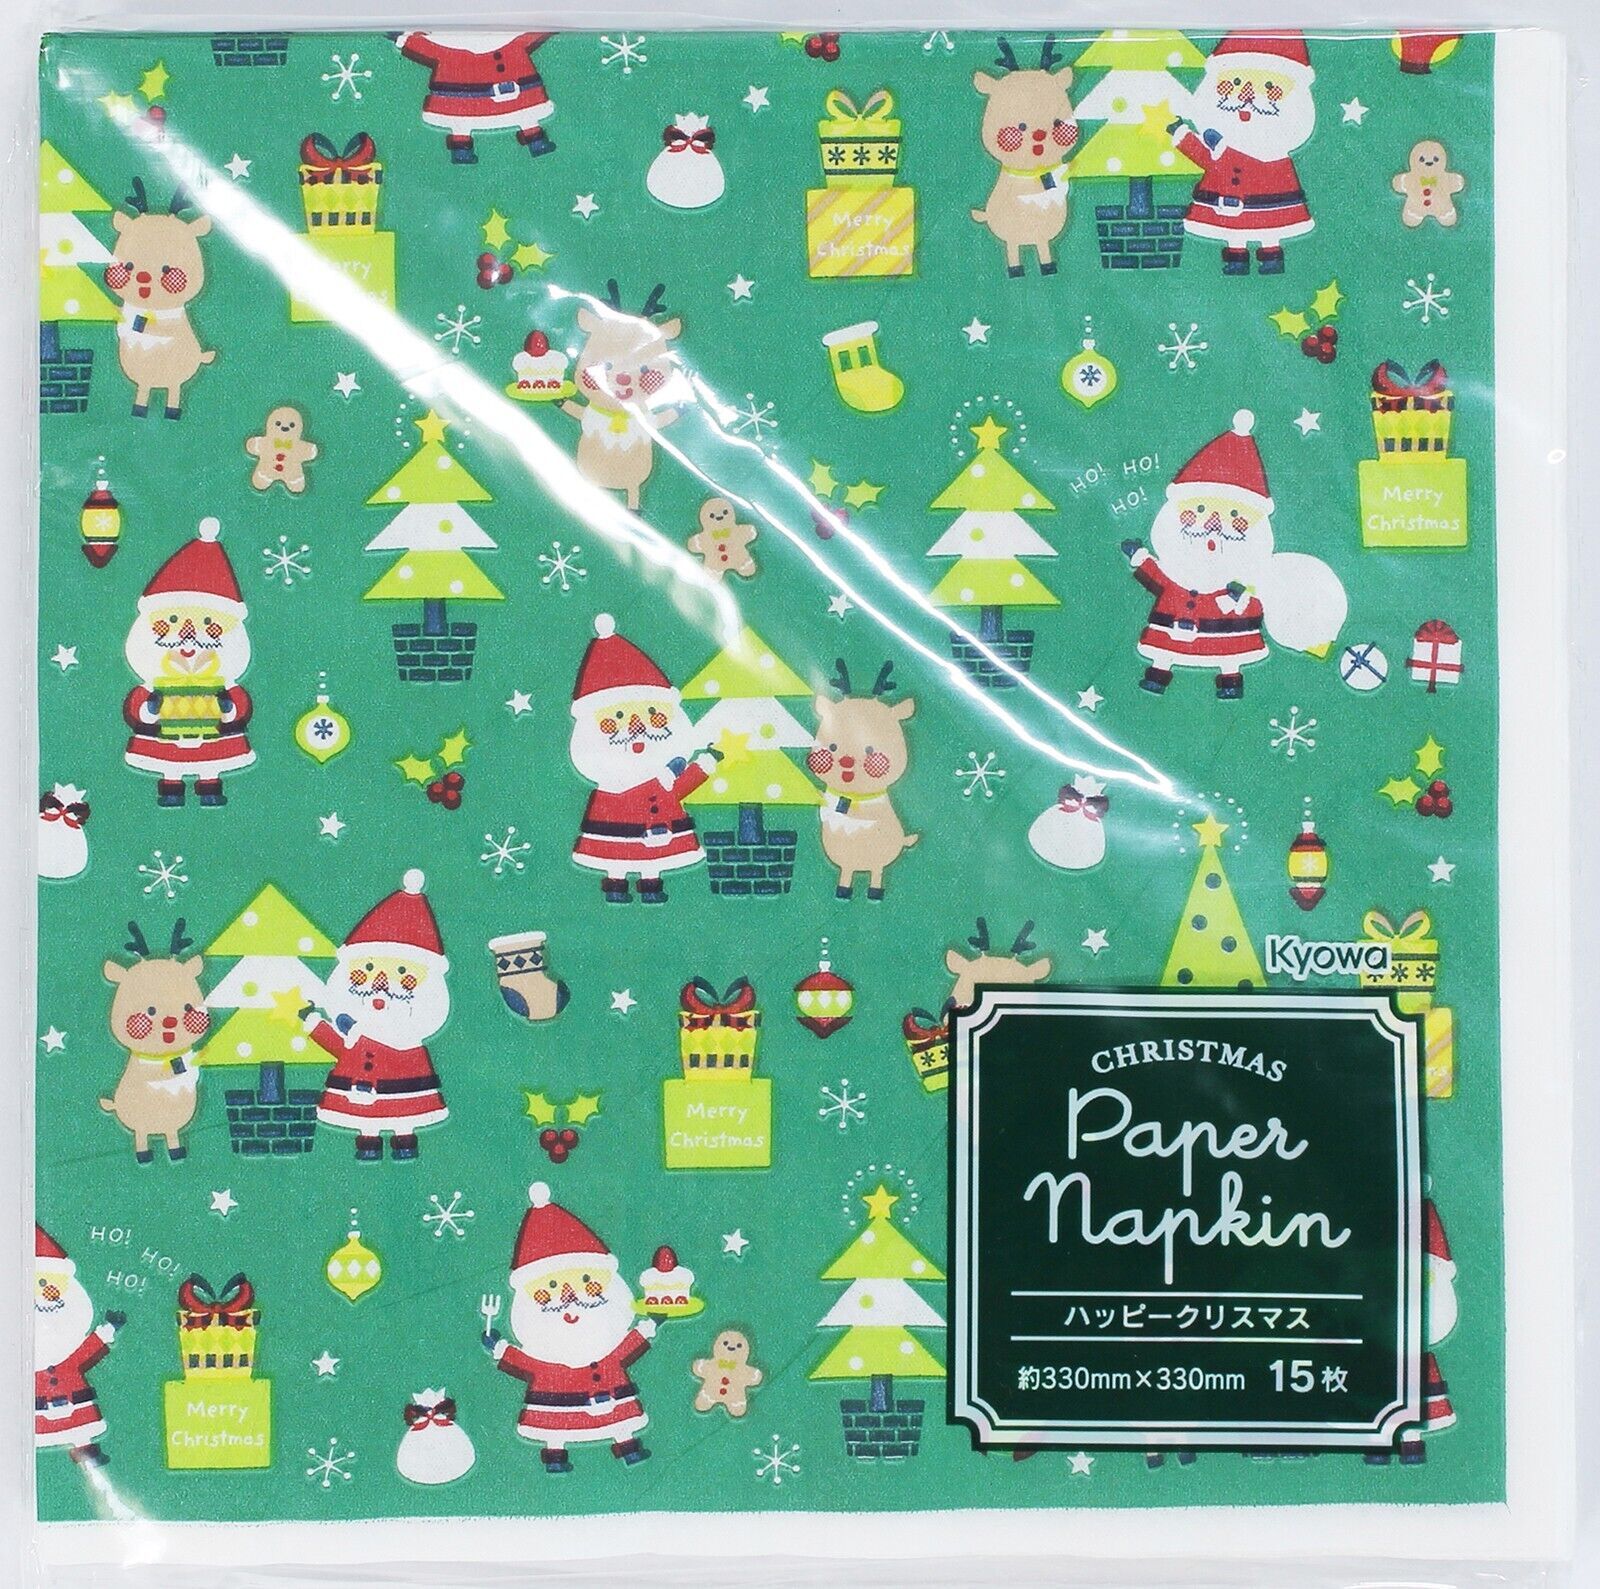 Design Paper Napkin Happy Christmas Santa Green 1 Designs 15 Sheets Kyowa